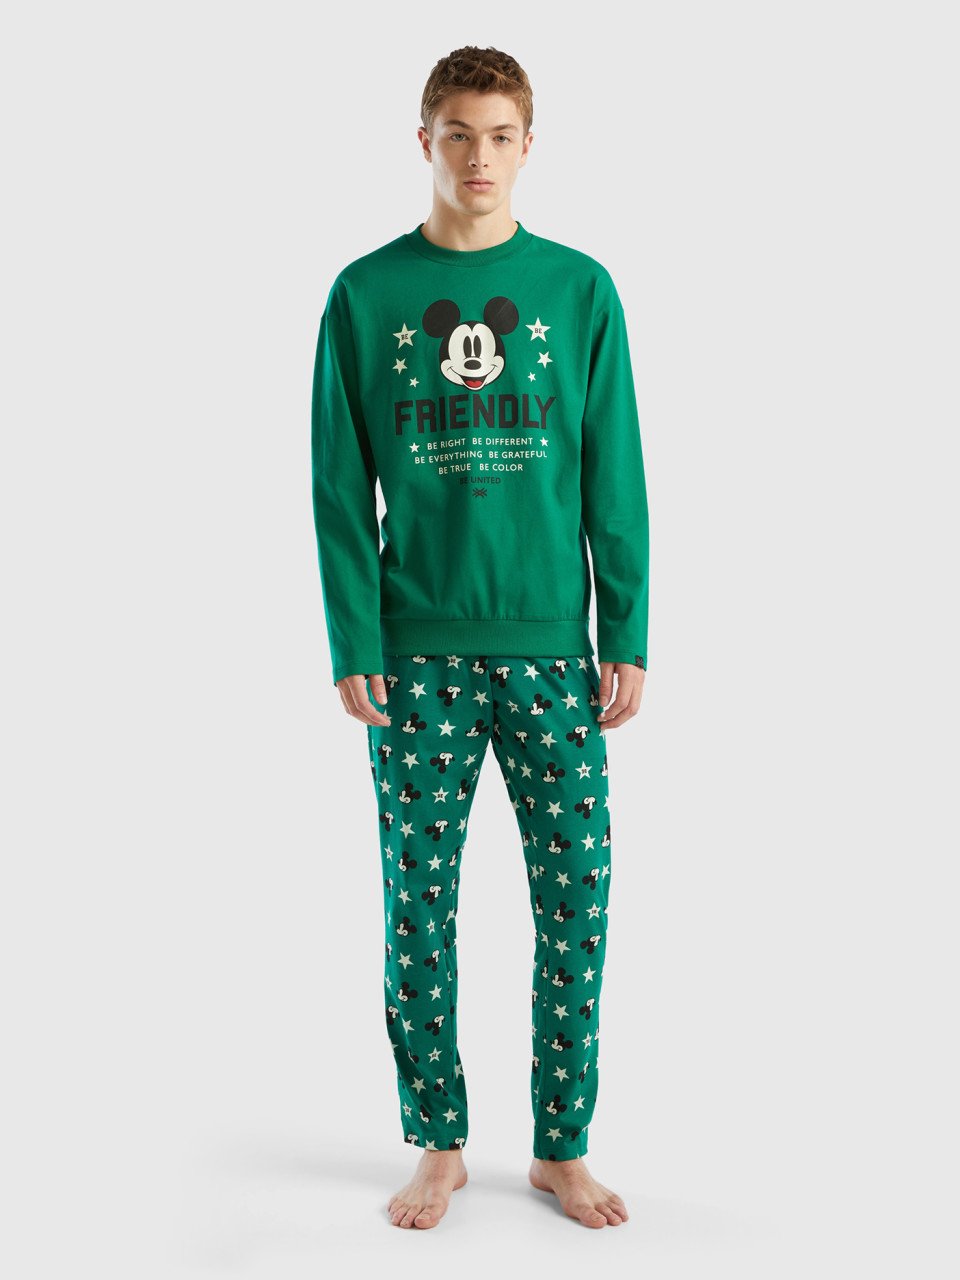 Benetton, Pyjamas With Neon Mickey Mouse Print, Green, Men